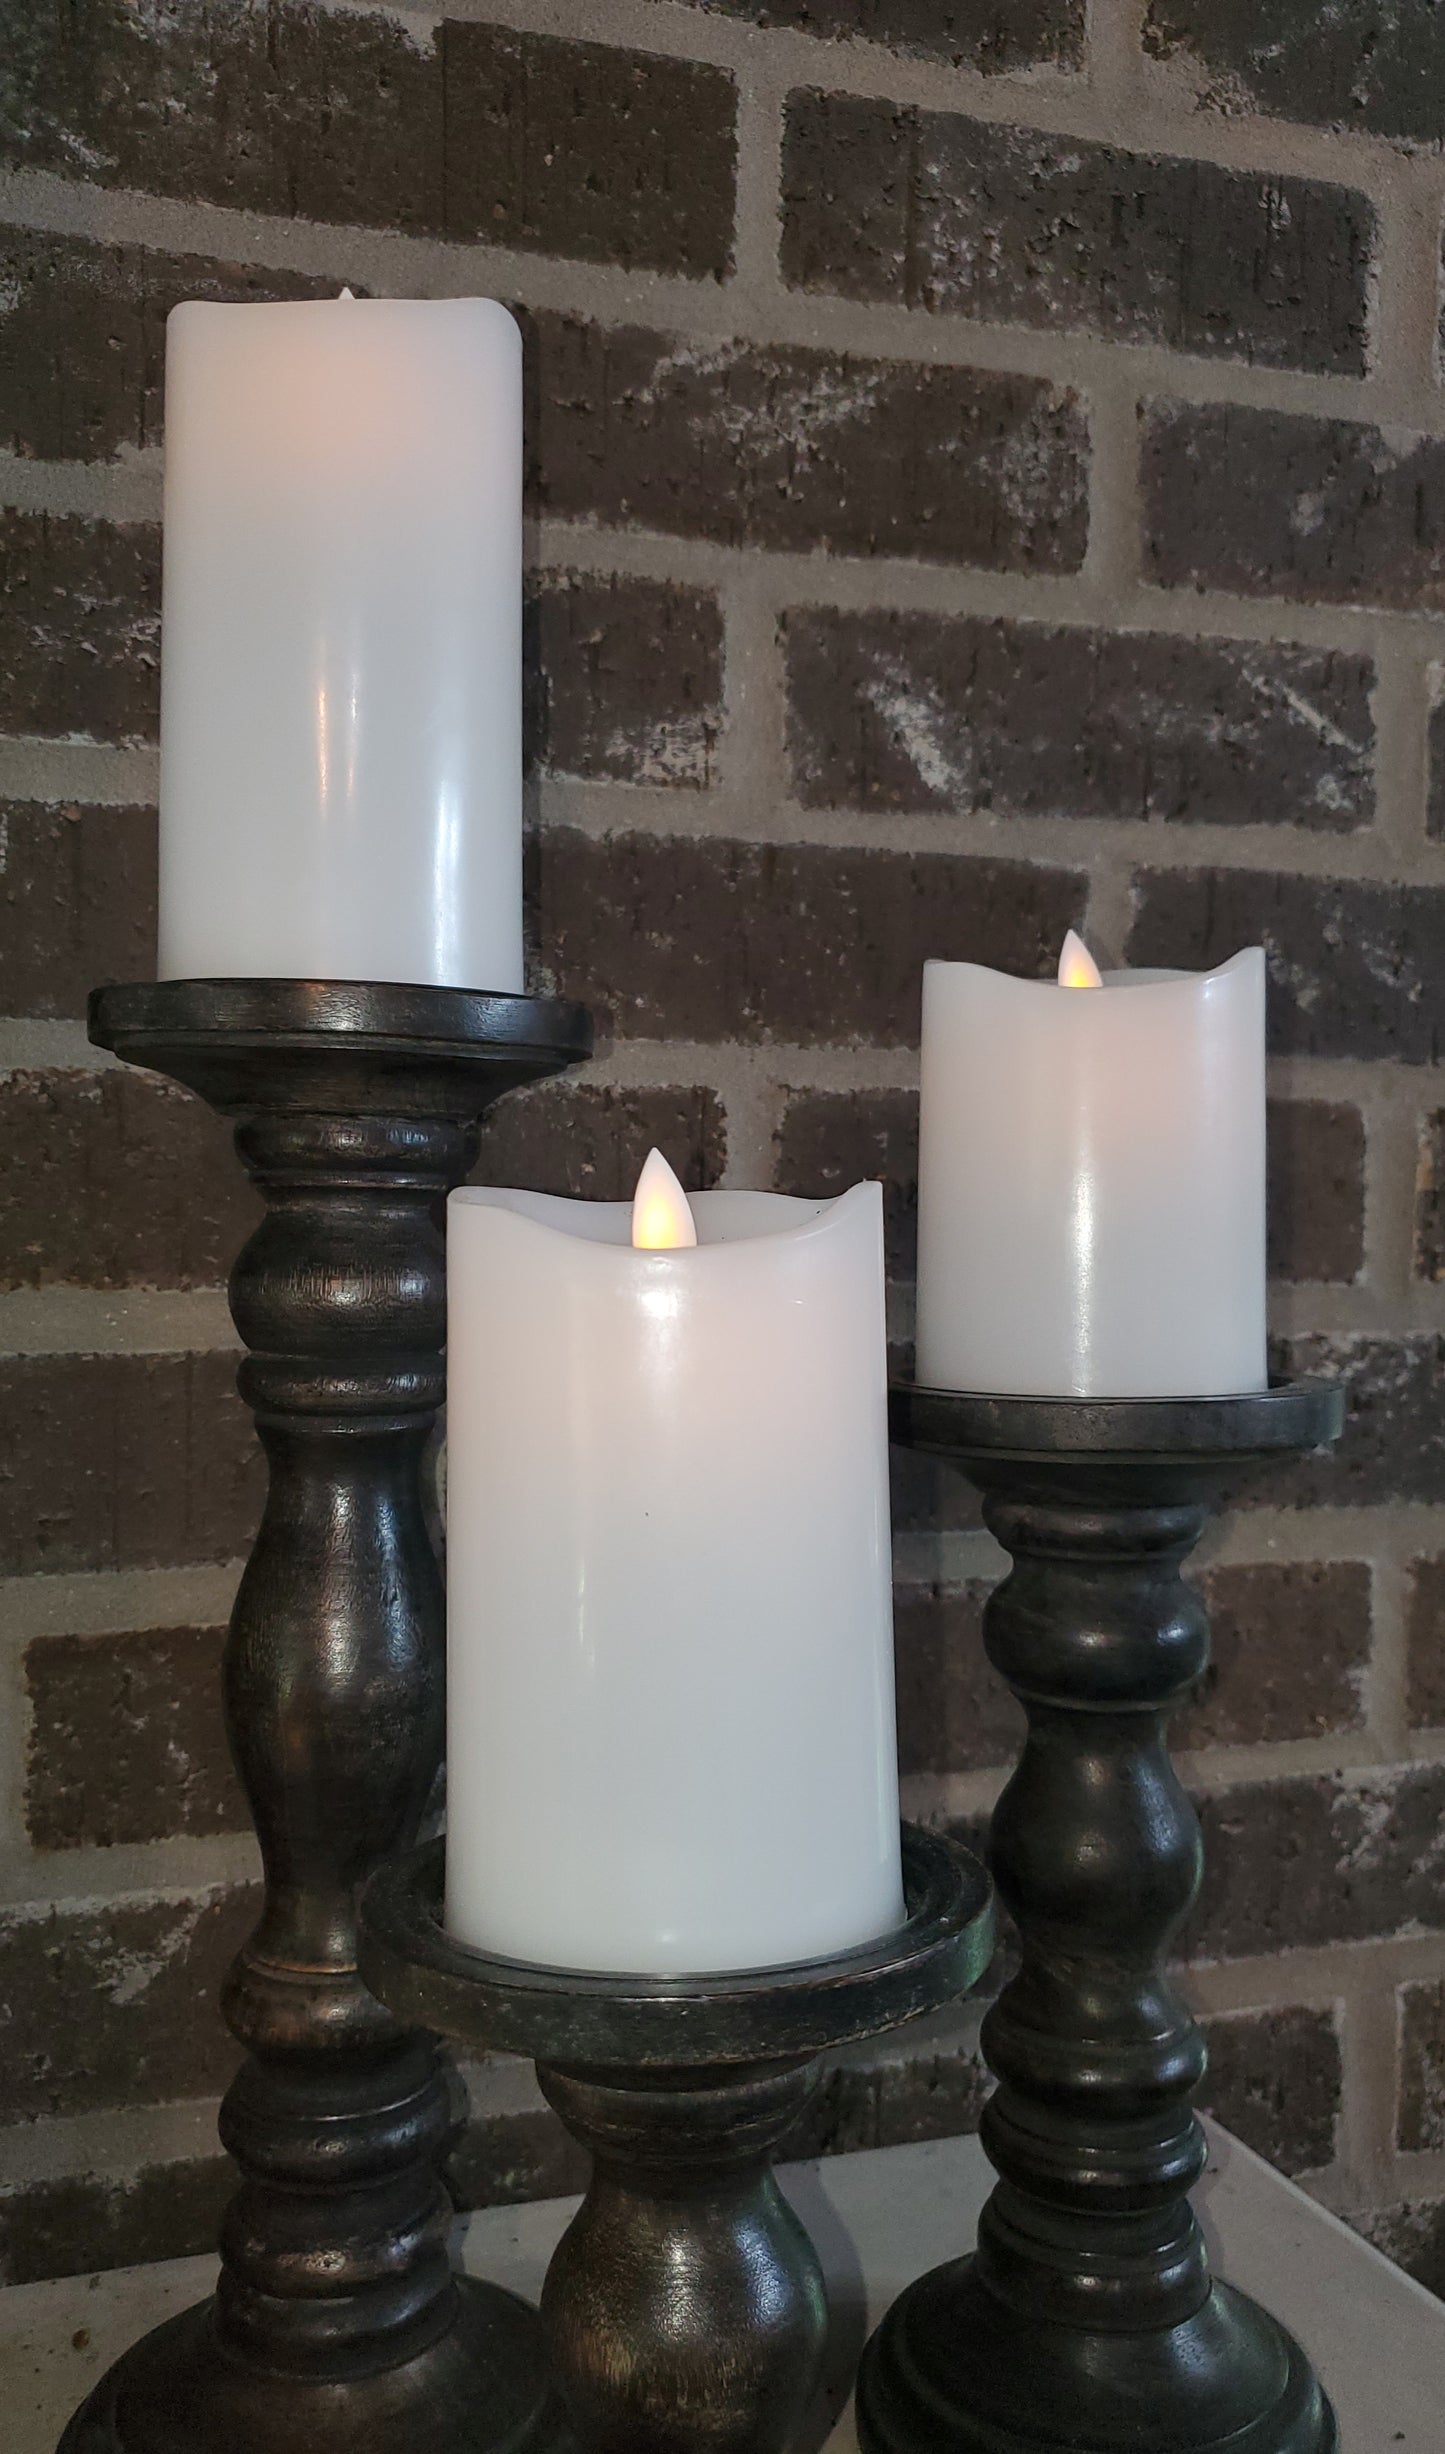 Flameless Pillar Candles (set of 3)